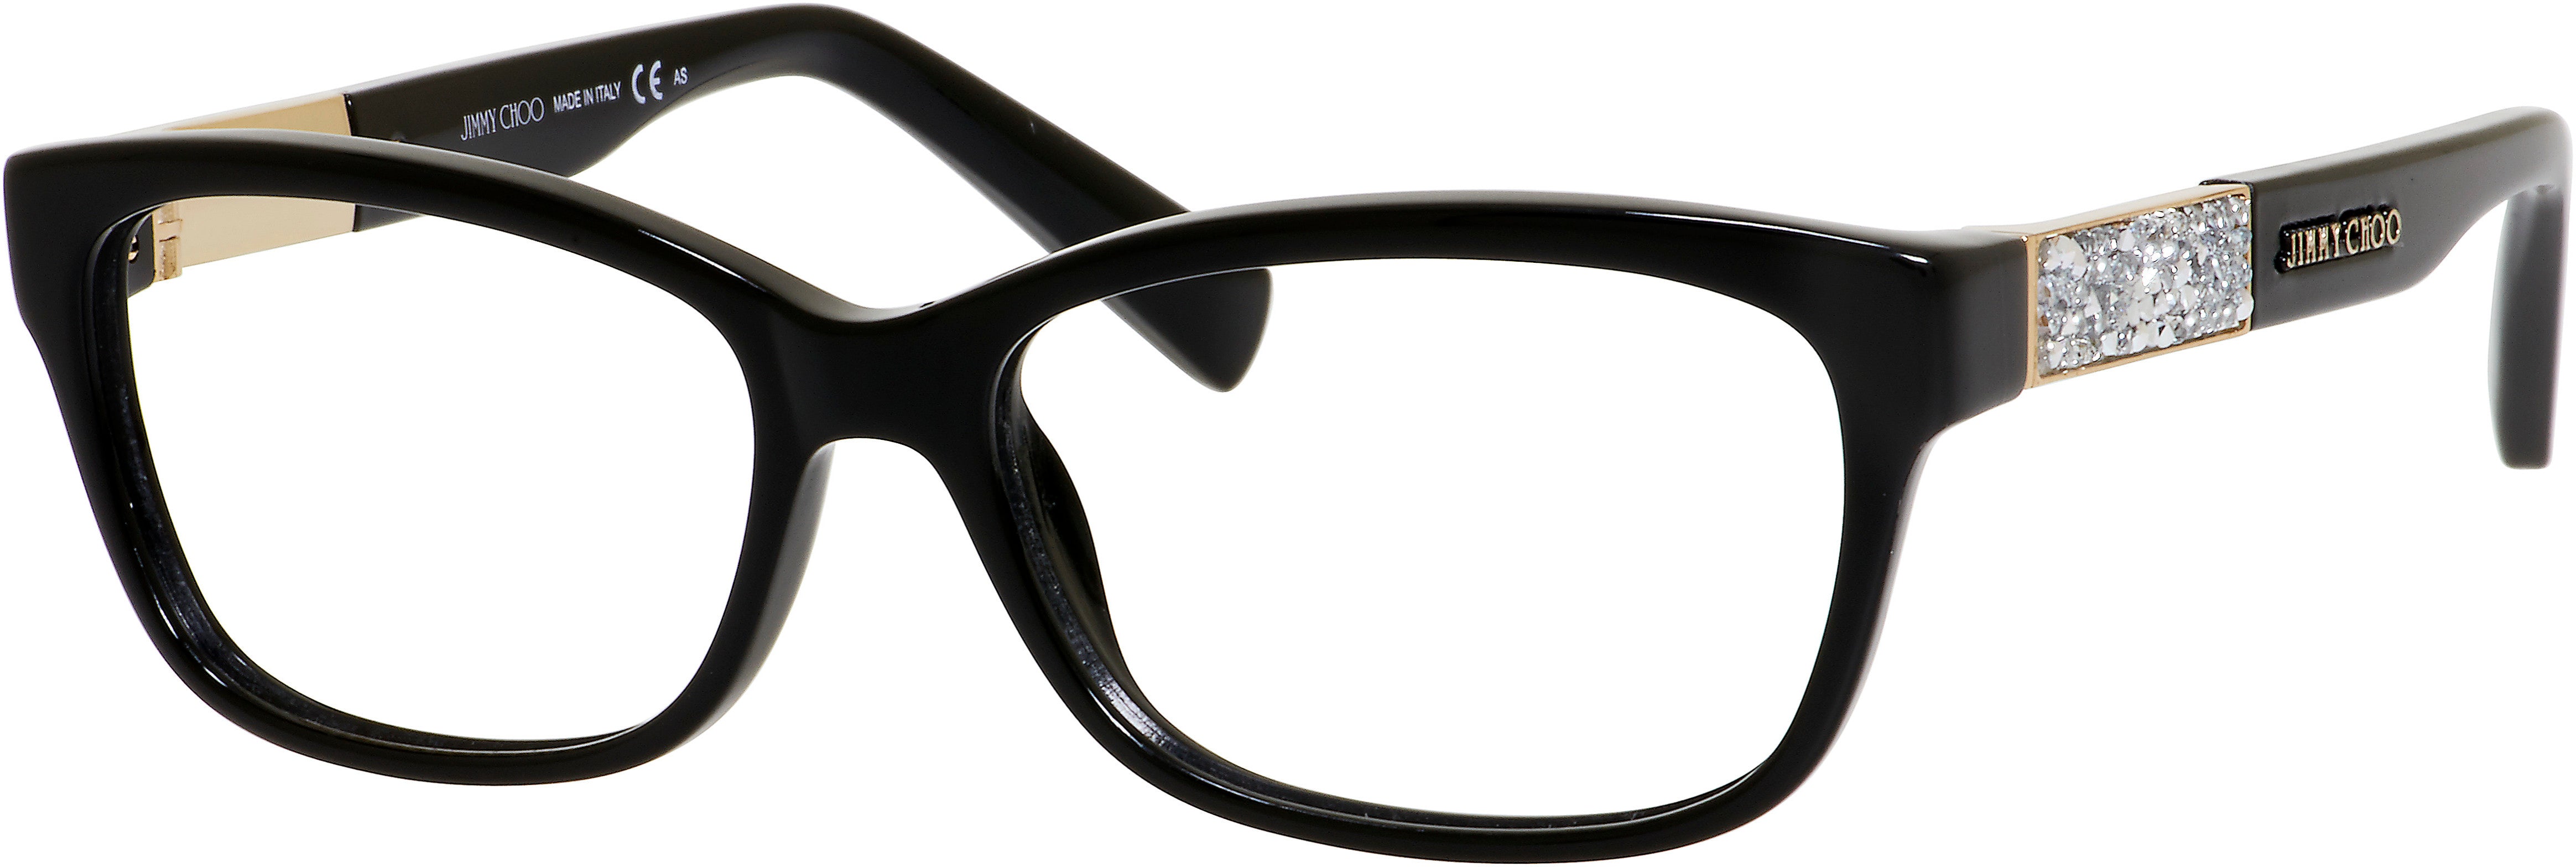  Jimmy Choo 110 Rectangular Eyeglasses 029A-029A  Shiny Black (00 Demo Lens)